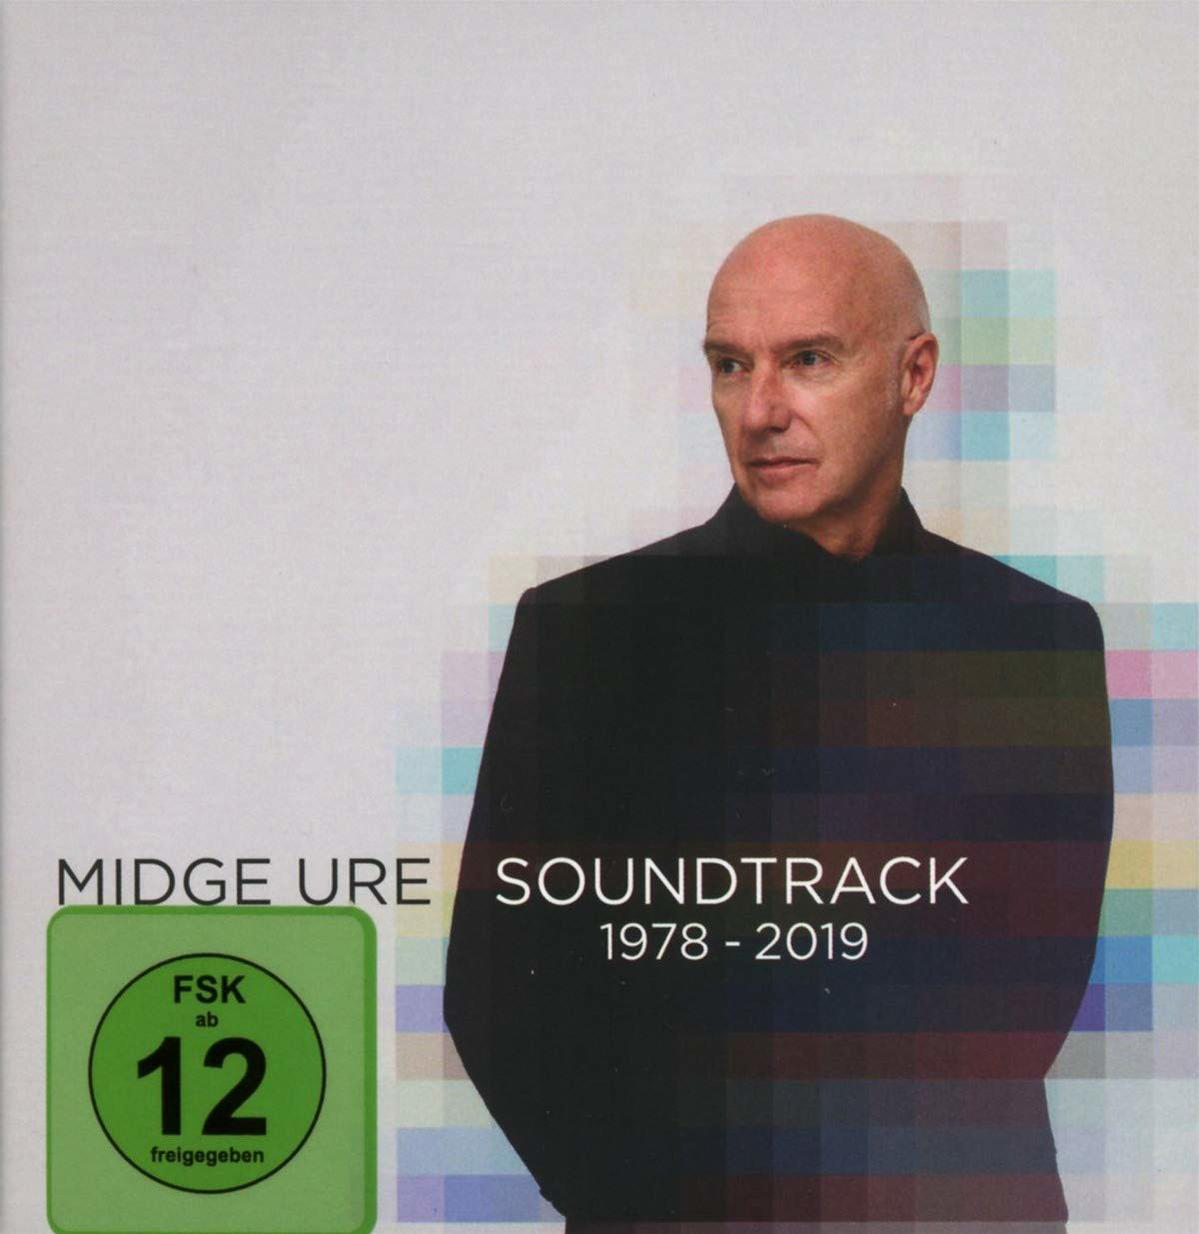 Midge Ure - Soundtrack:1978-2019 - + DVD Video) (CD